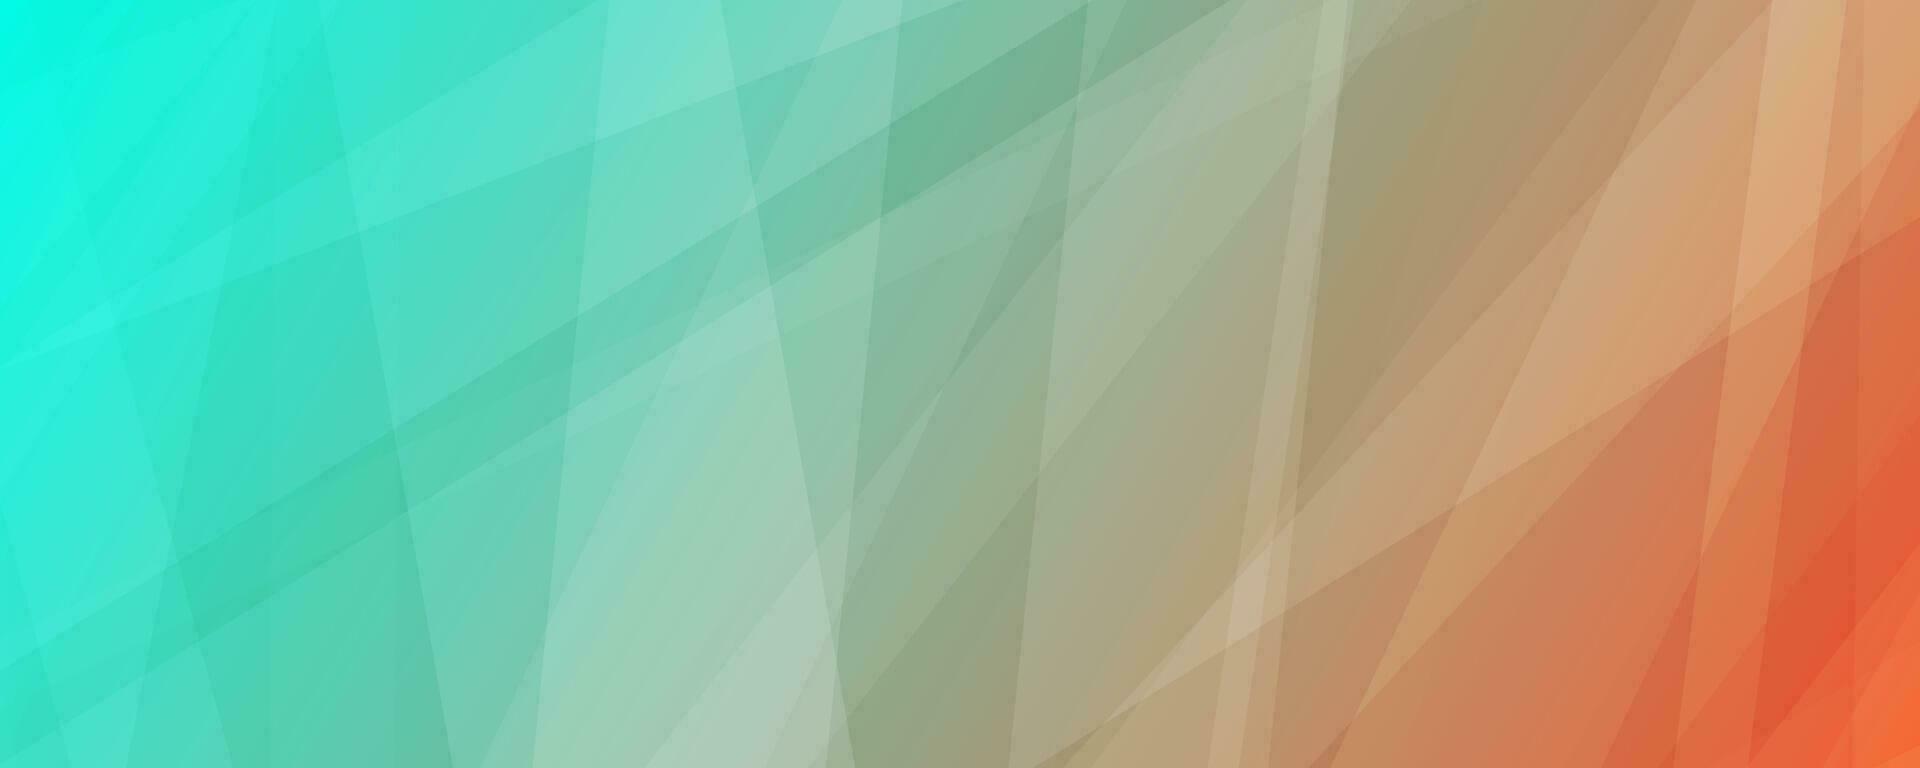 modern färgrik lutning bakgrund med rader vektor